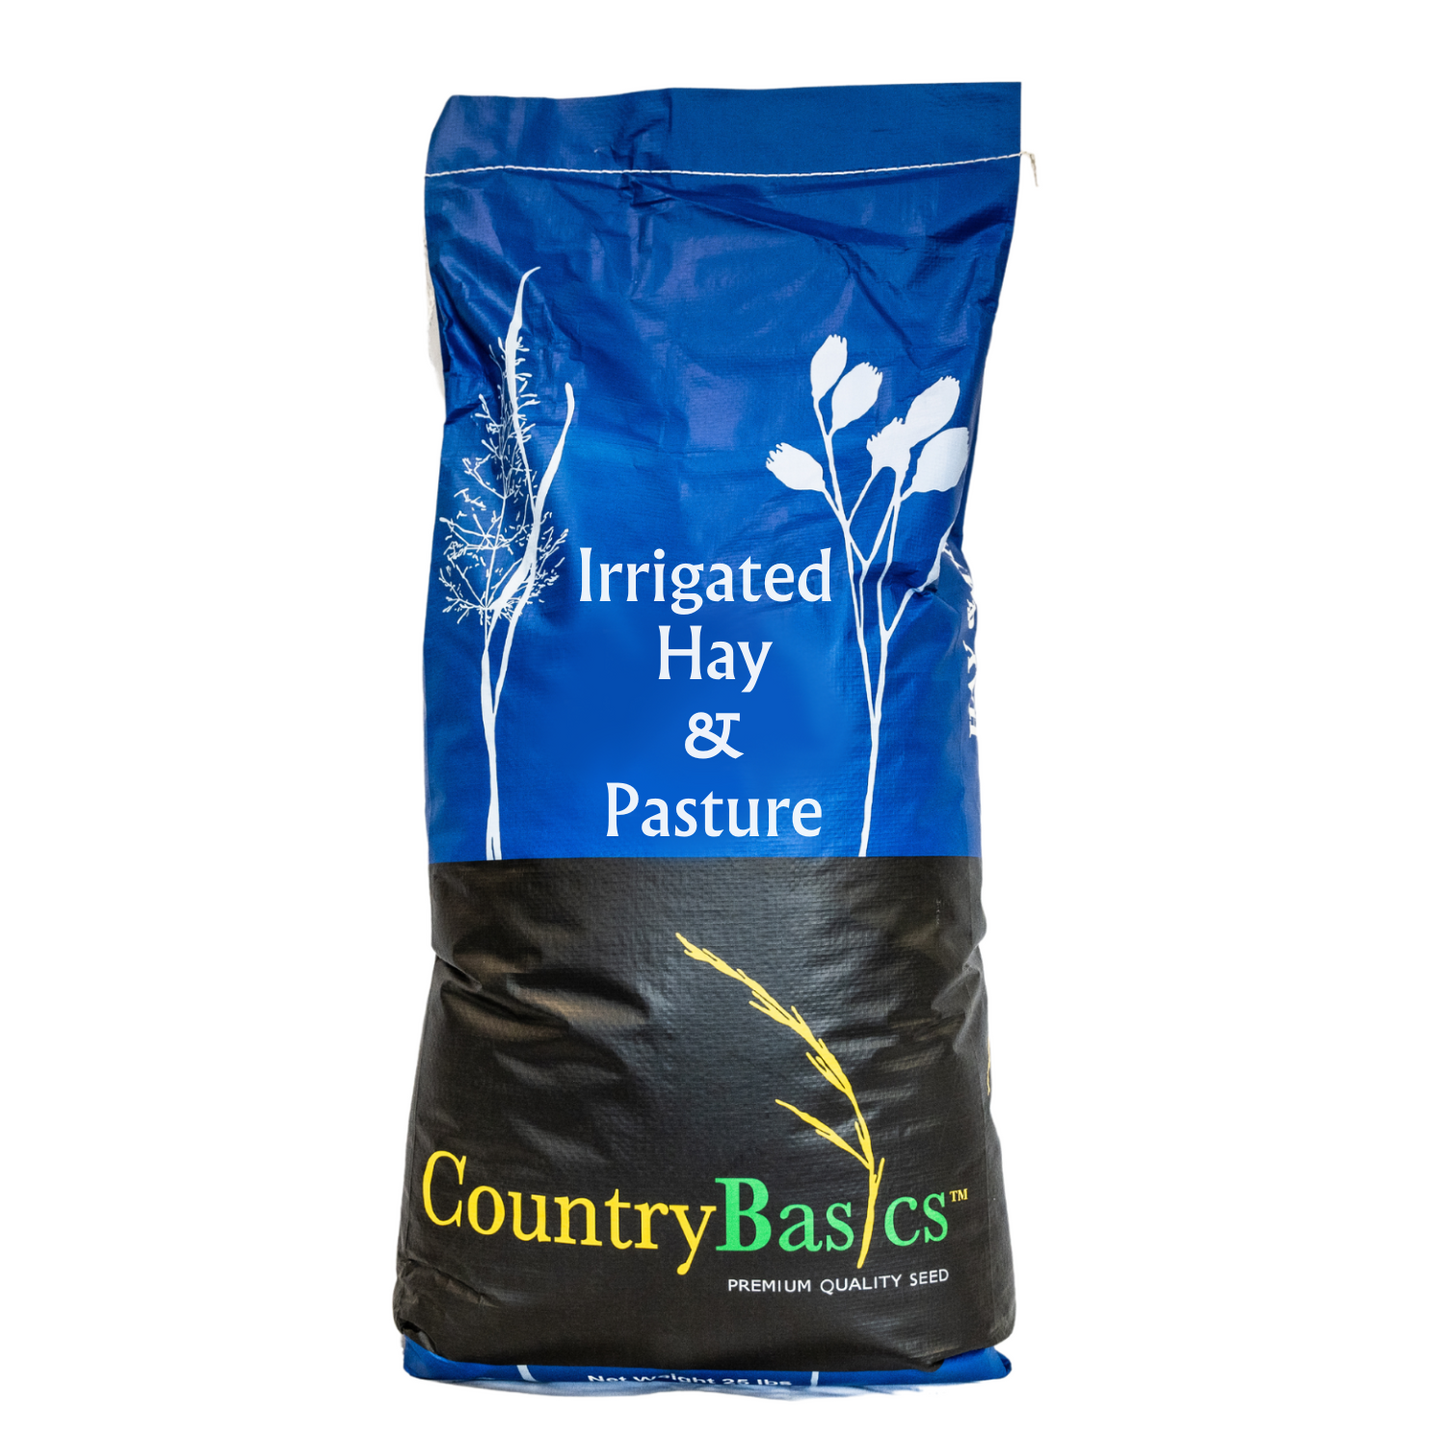 Irrigated Hay & Pasture